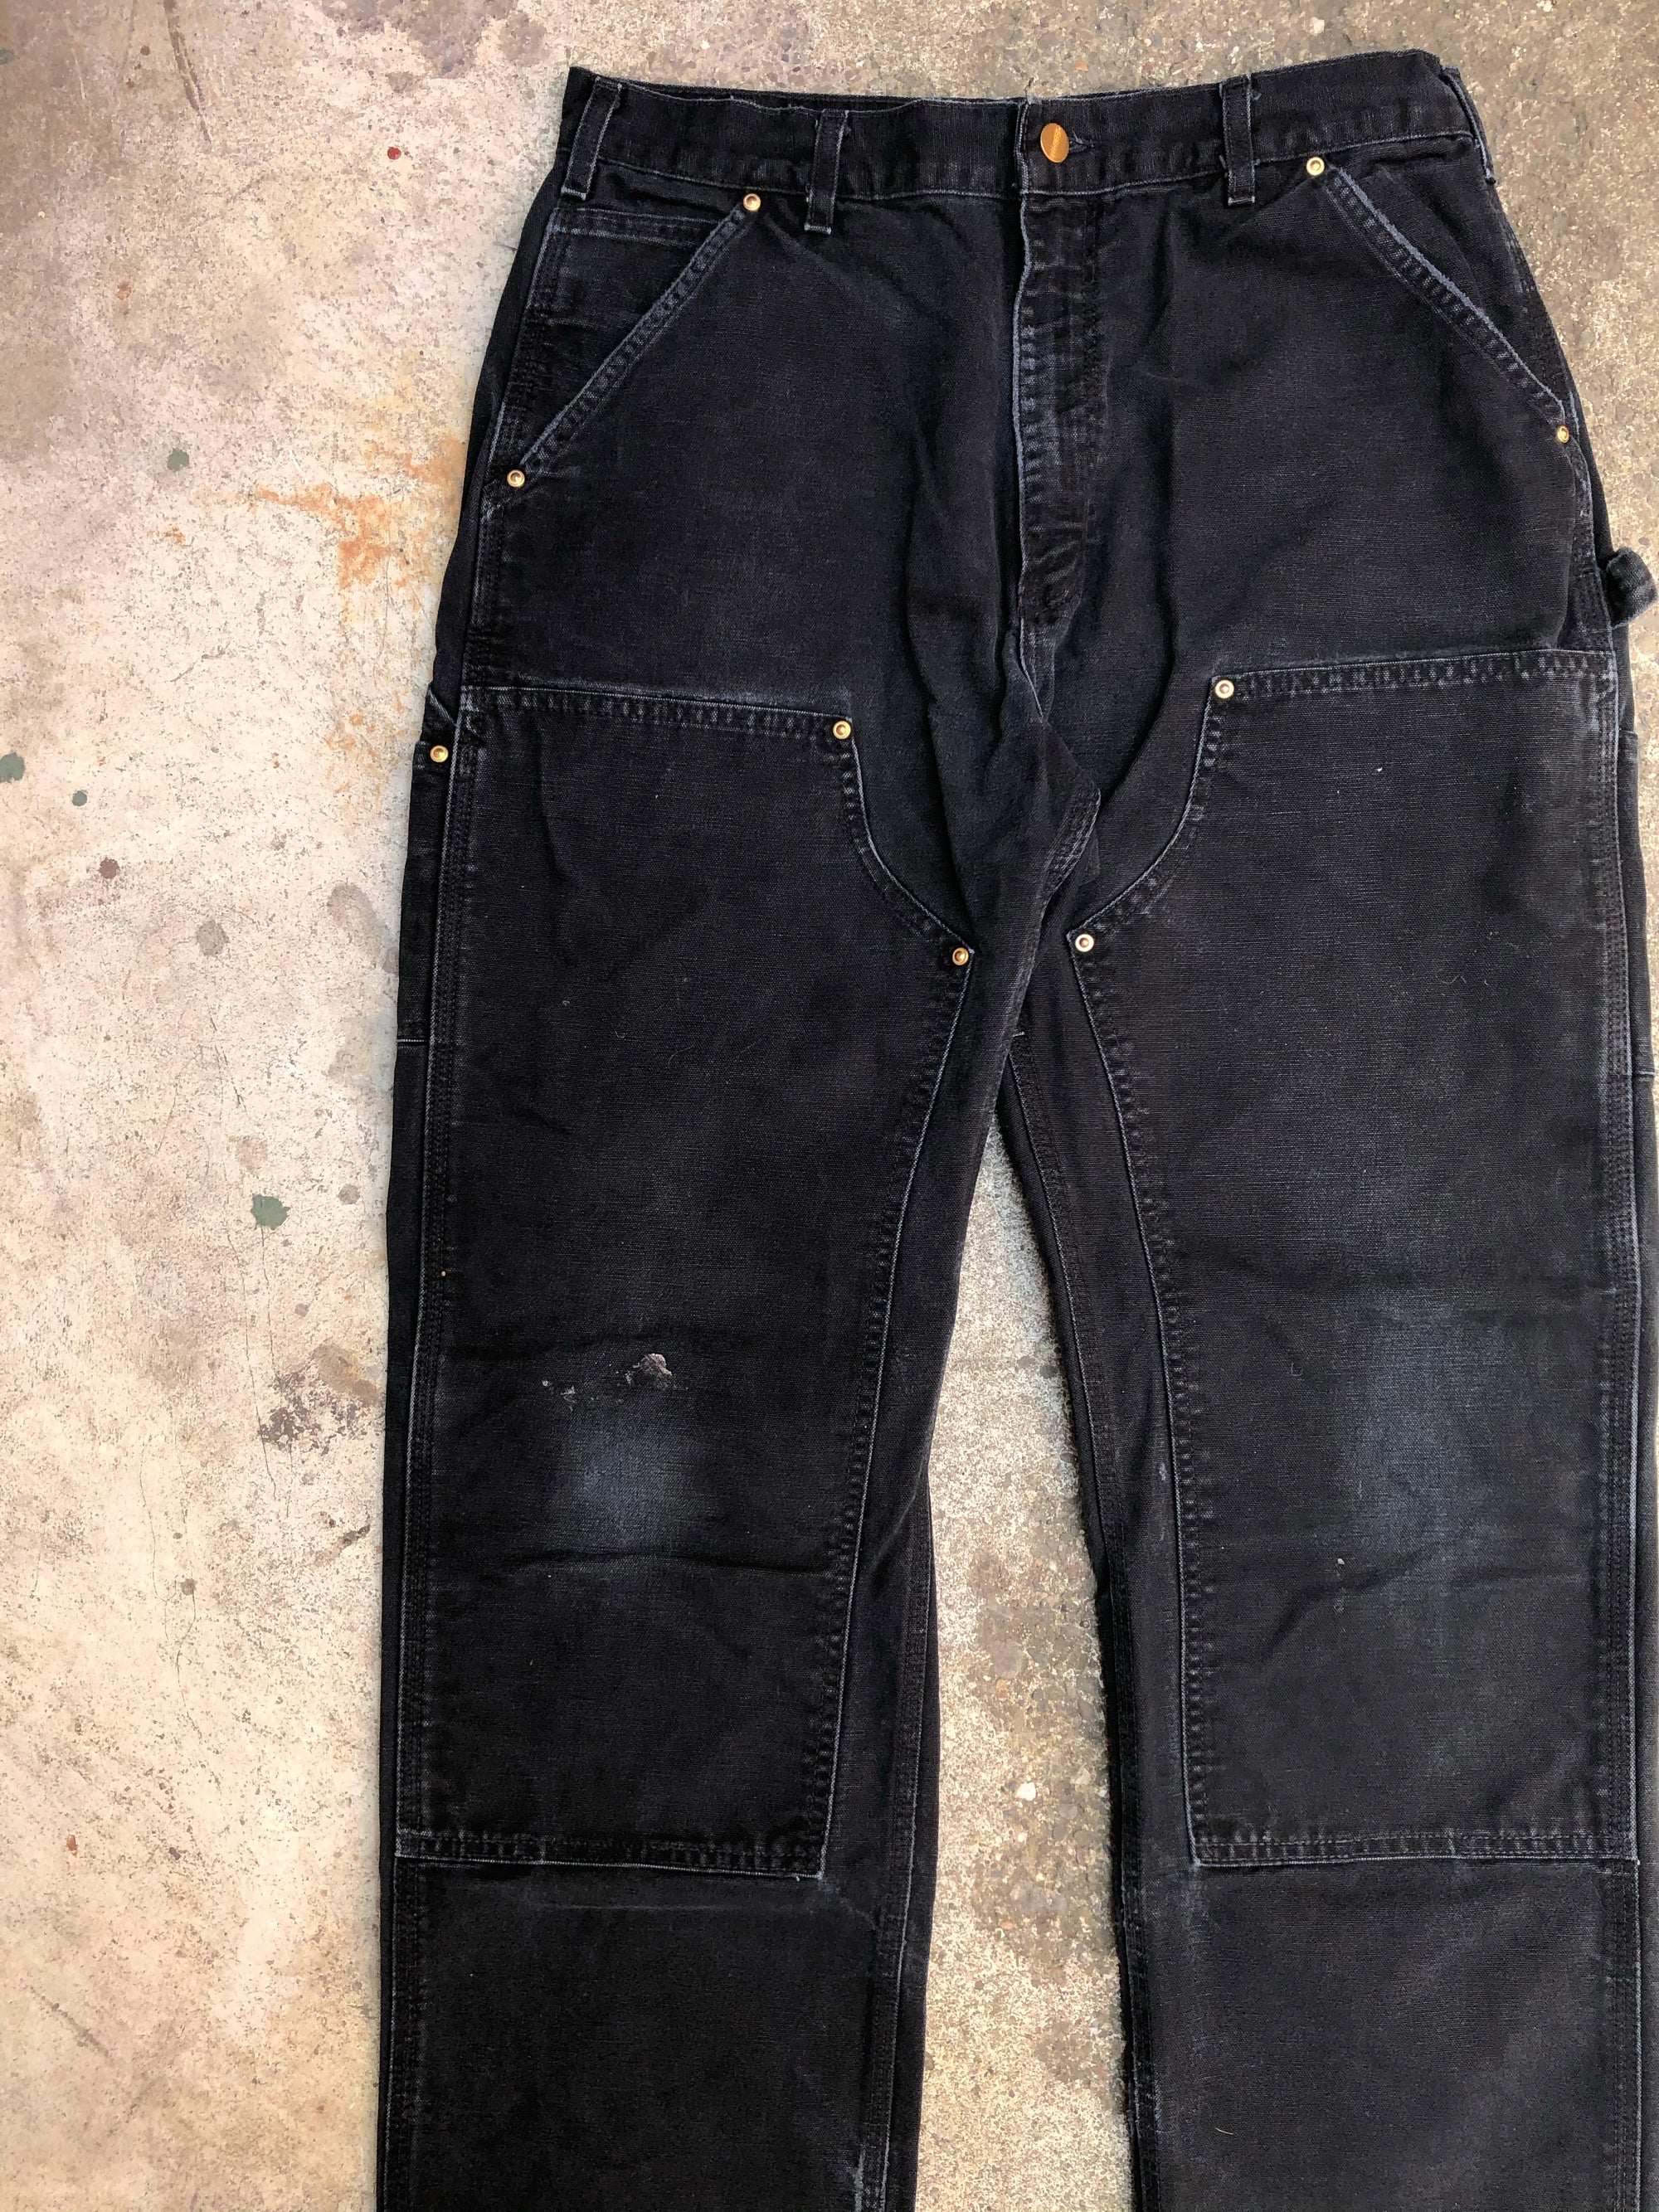 Carhartt B01 Black Double Front Knee Work Pants (33X31)